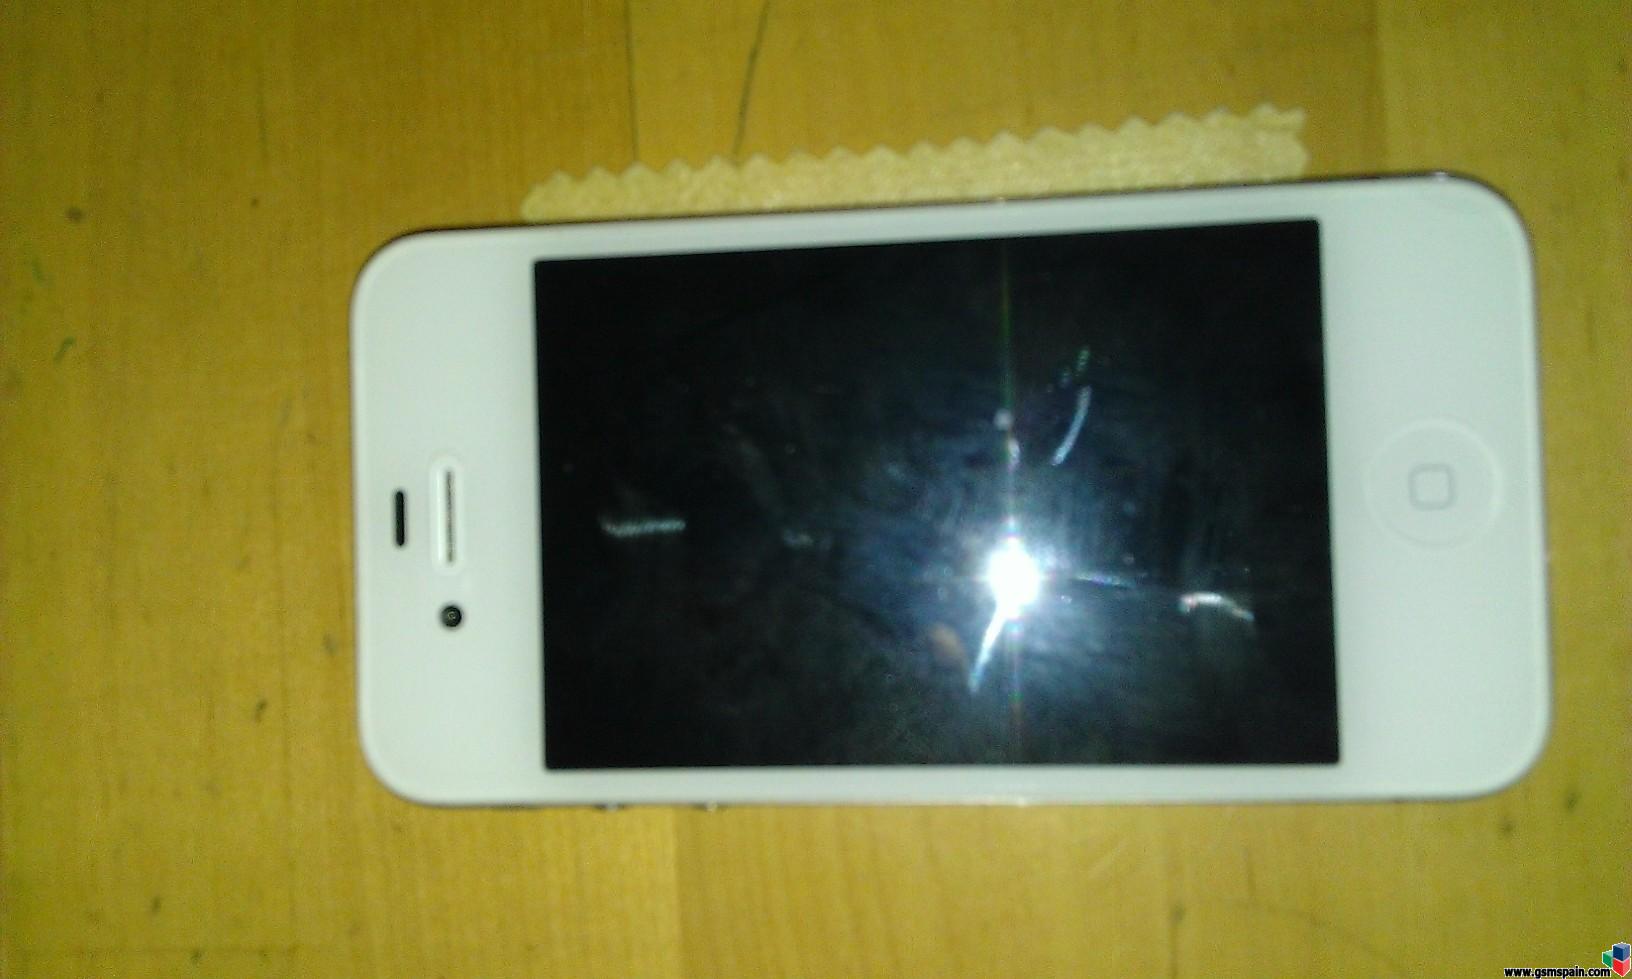 [VENDO] Iphone 4s 16 gb libre color blanco